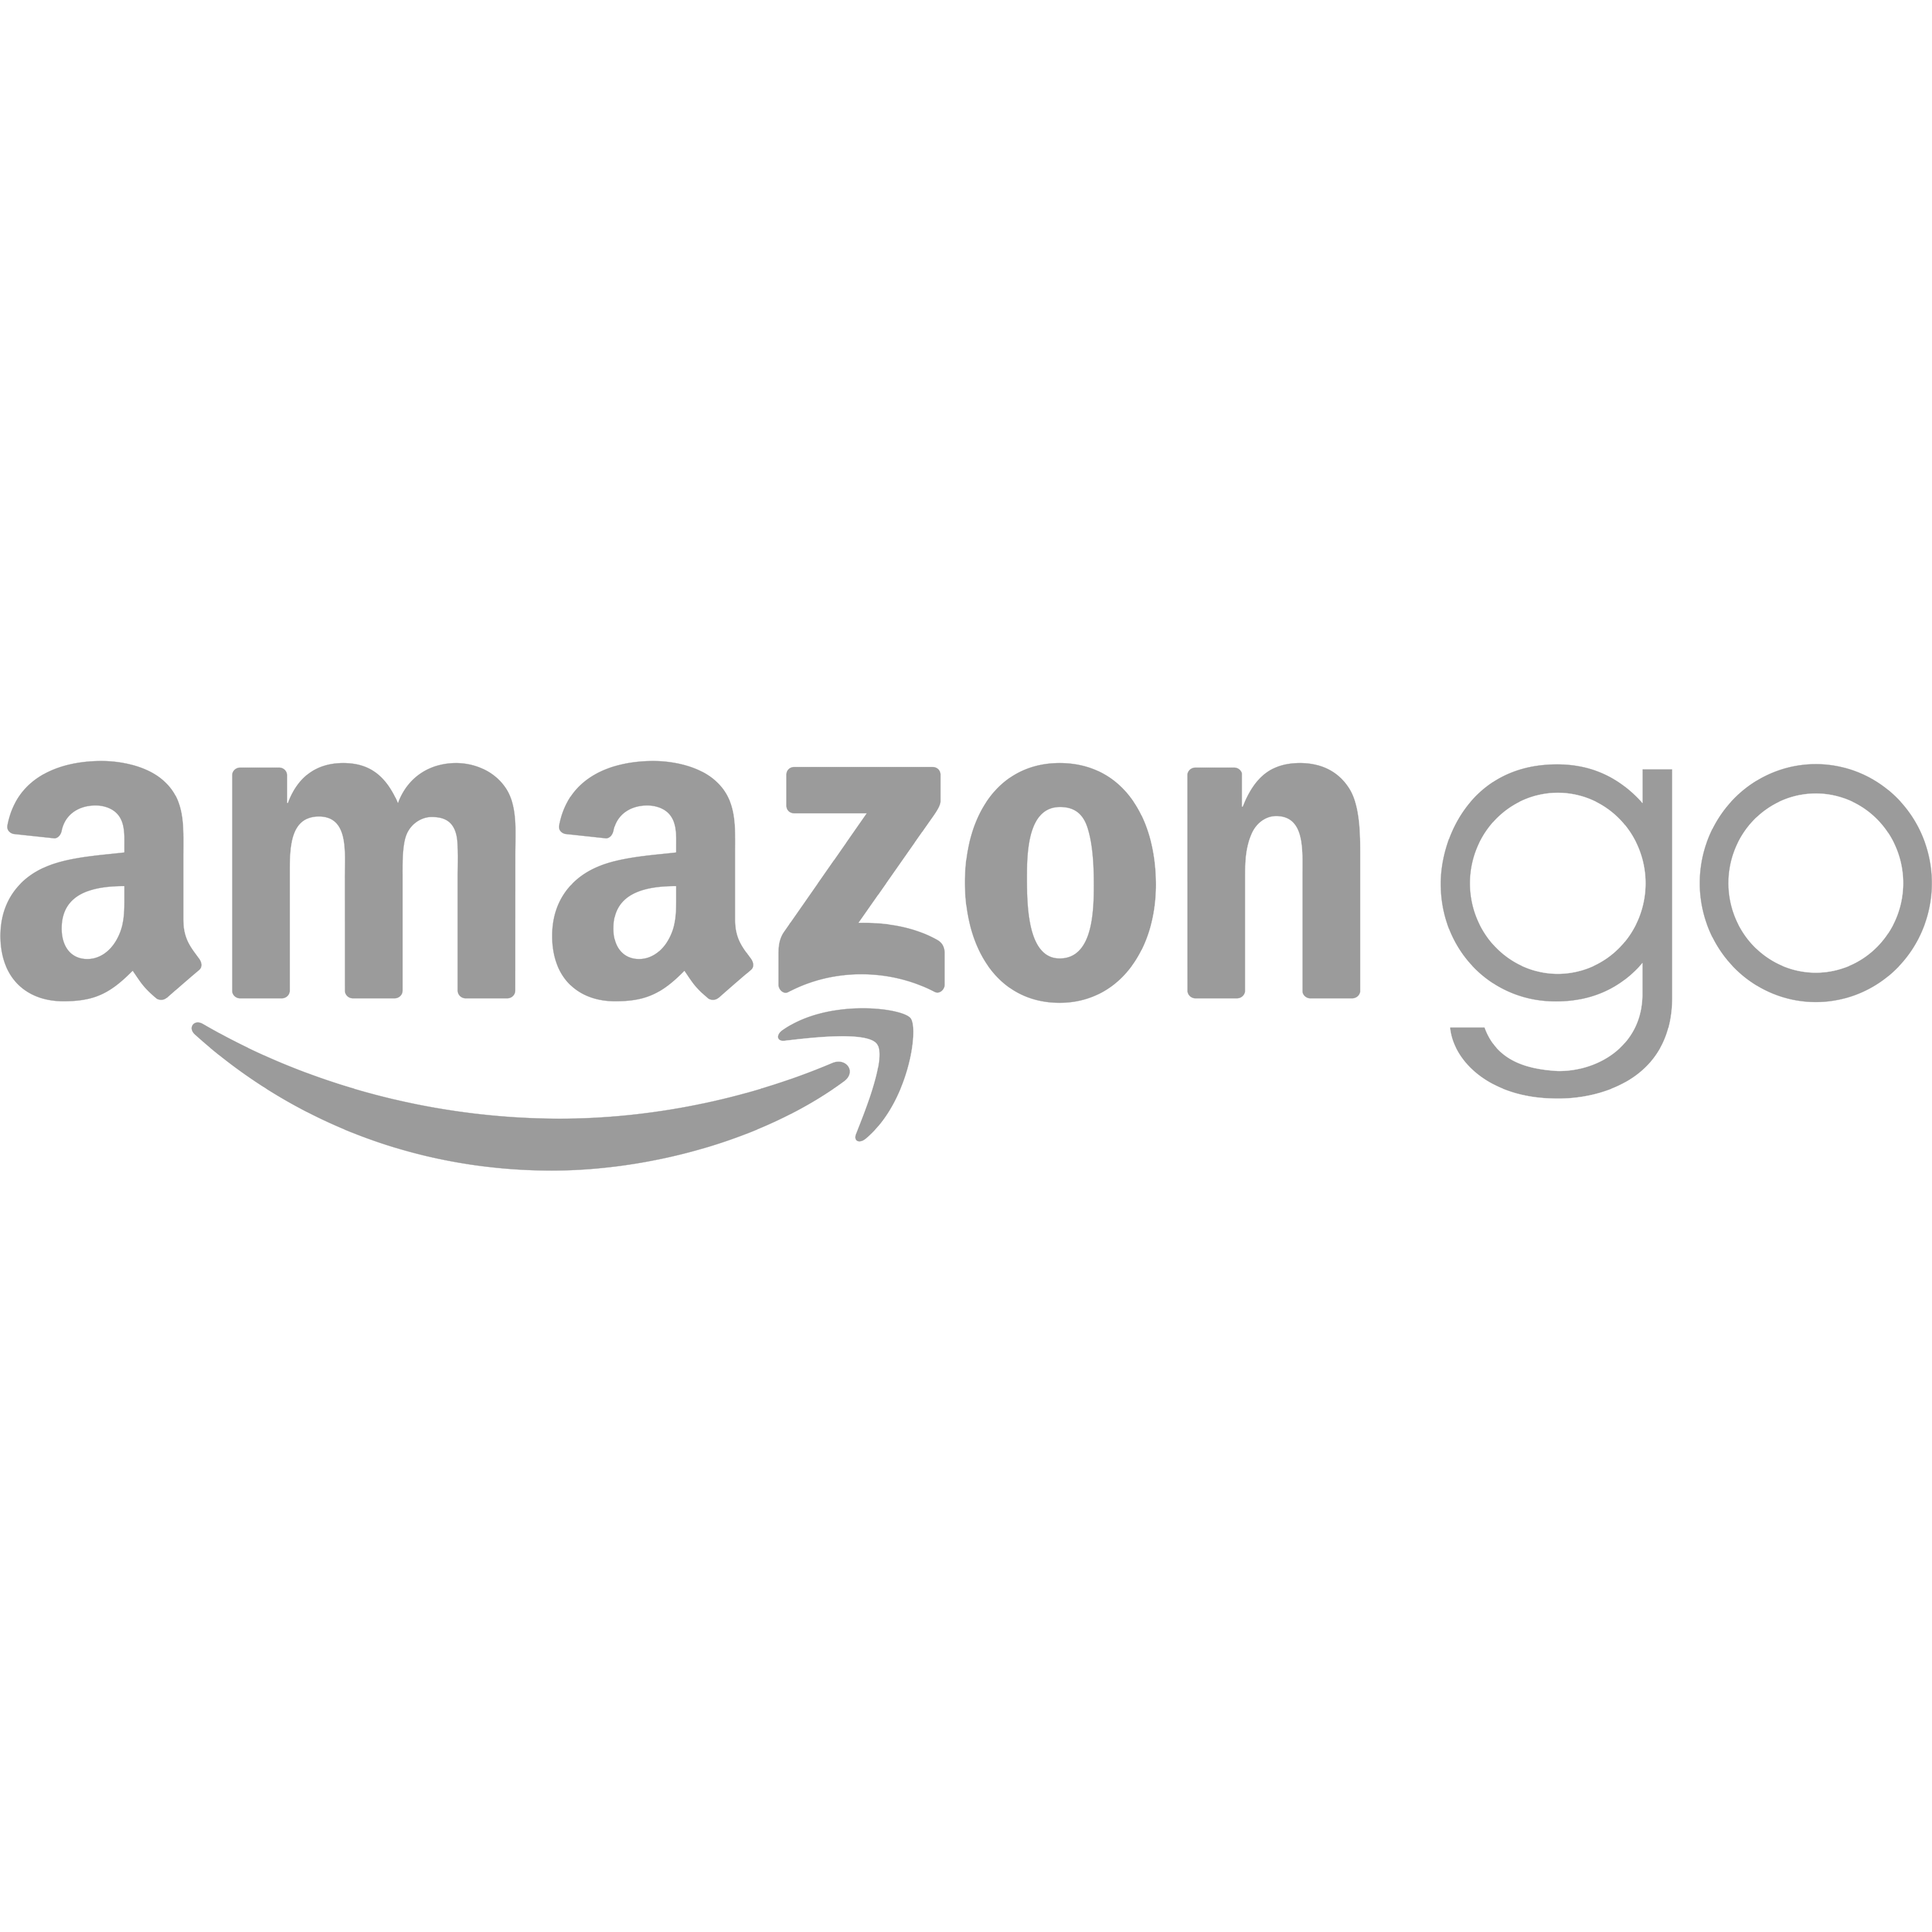 Amazon Go Logo Transparent Picture